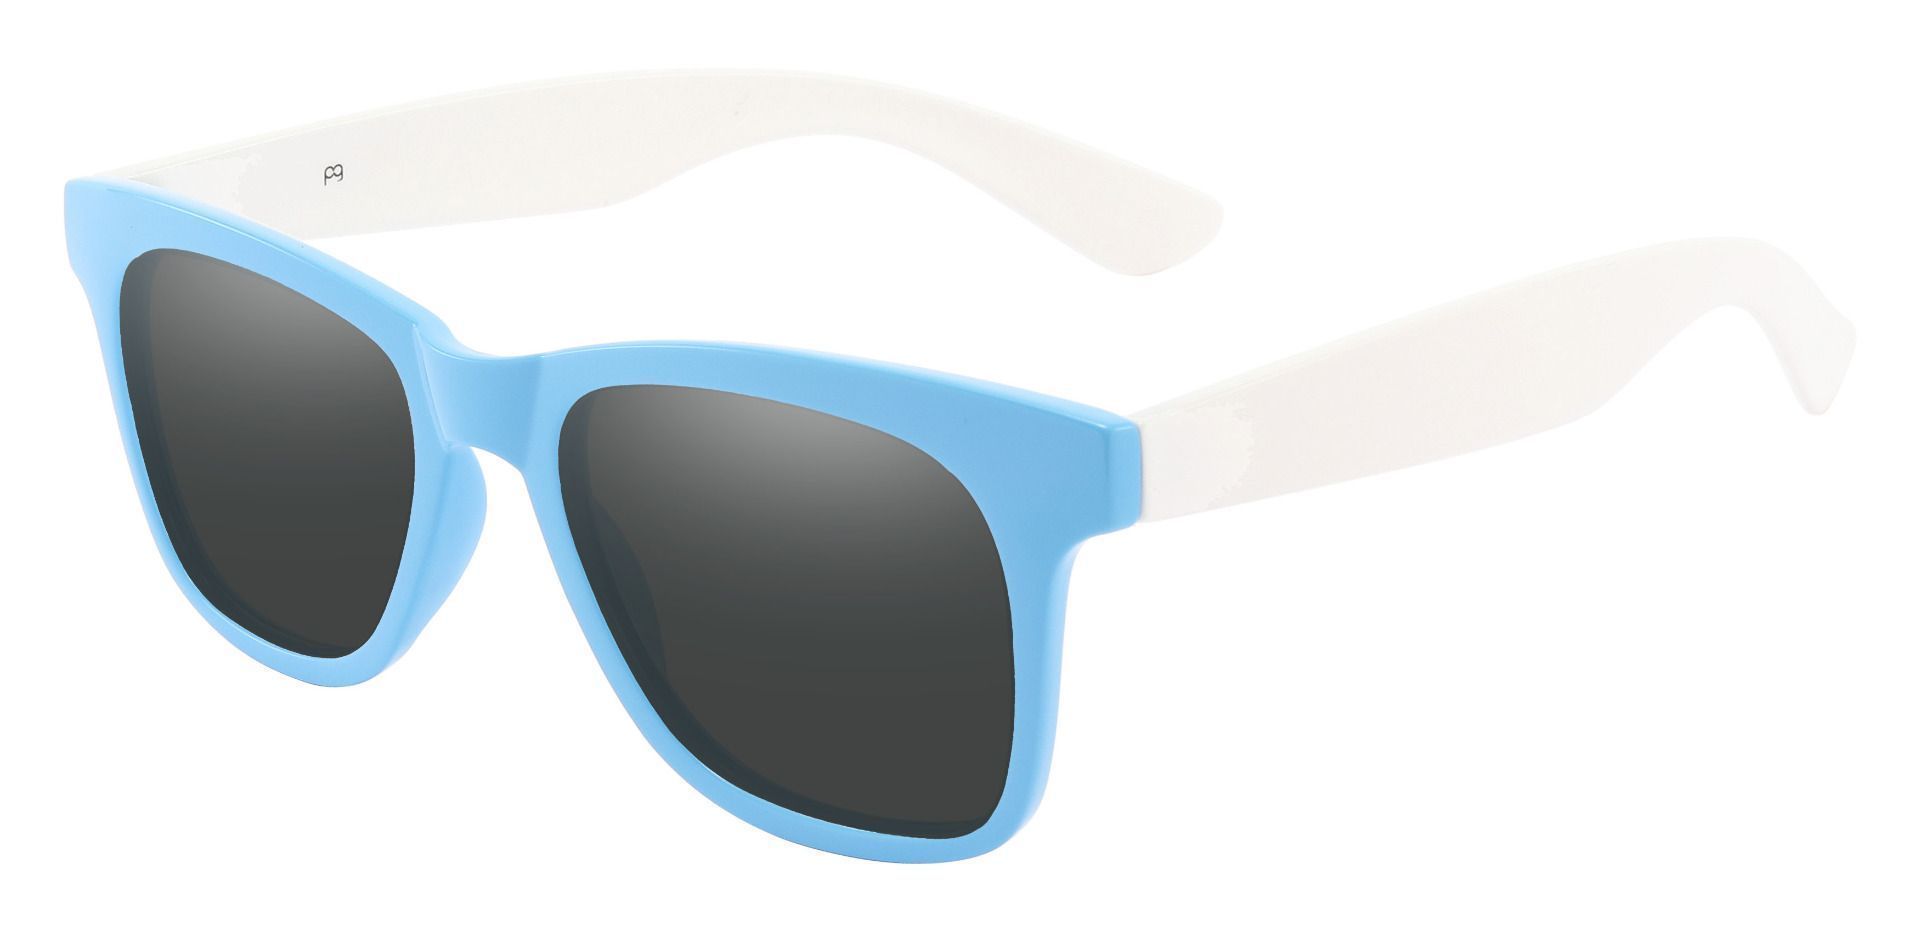 Hurley Square Progressive Sunglasses - Blue Frame with Gray Lenses